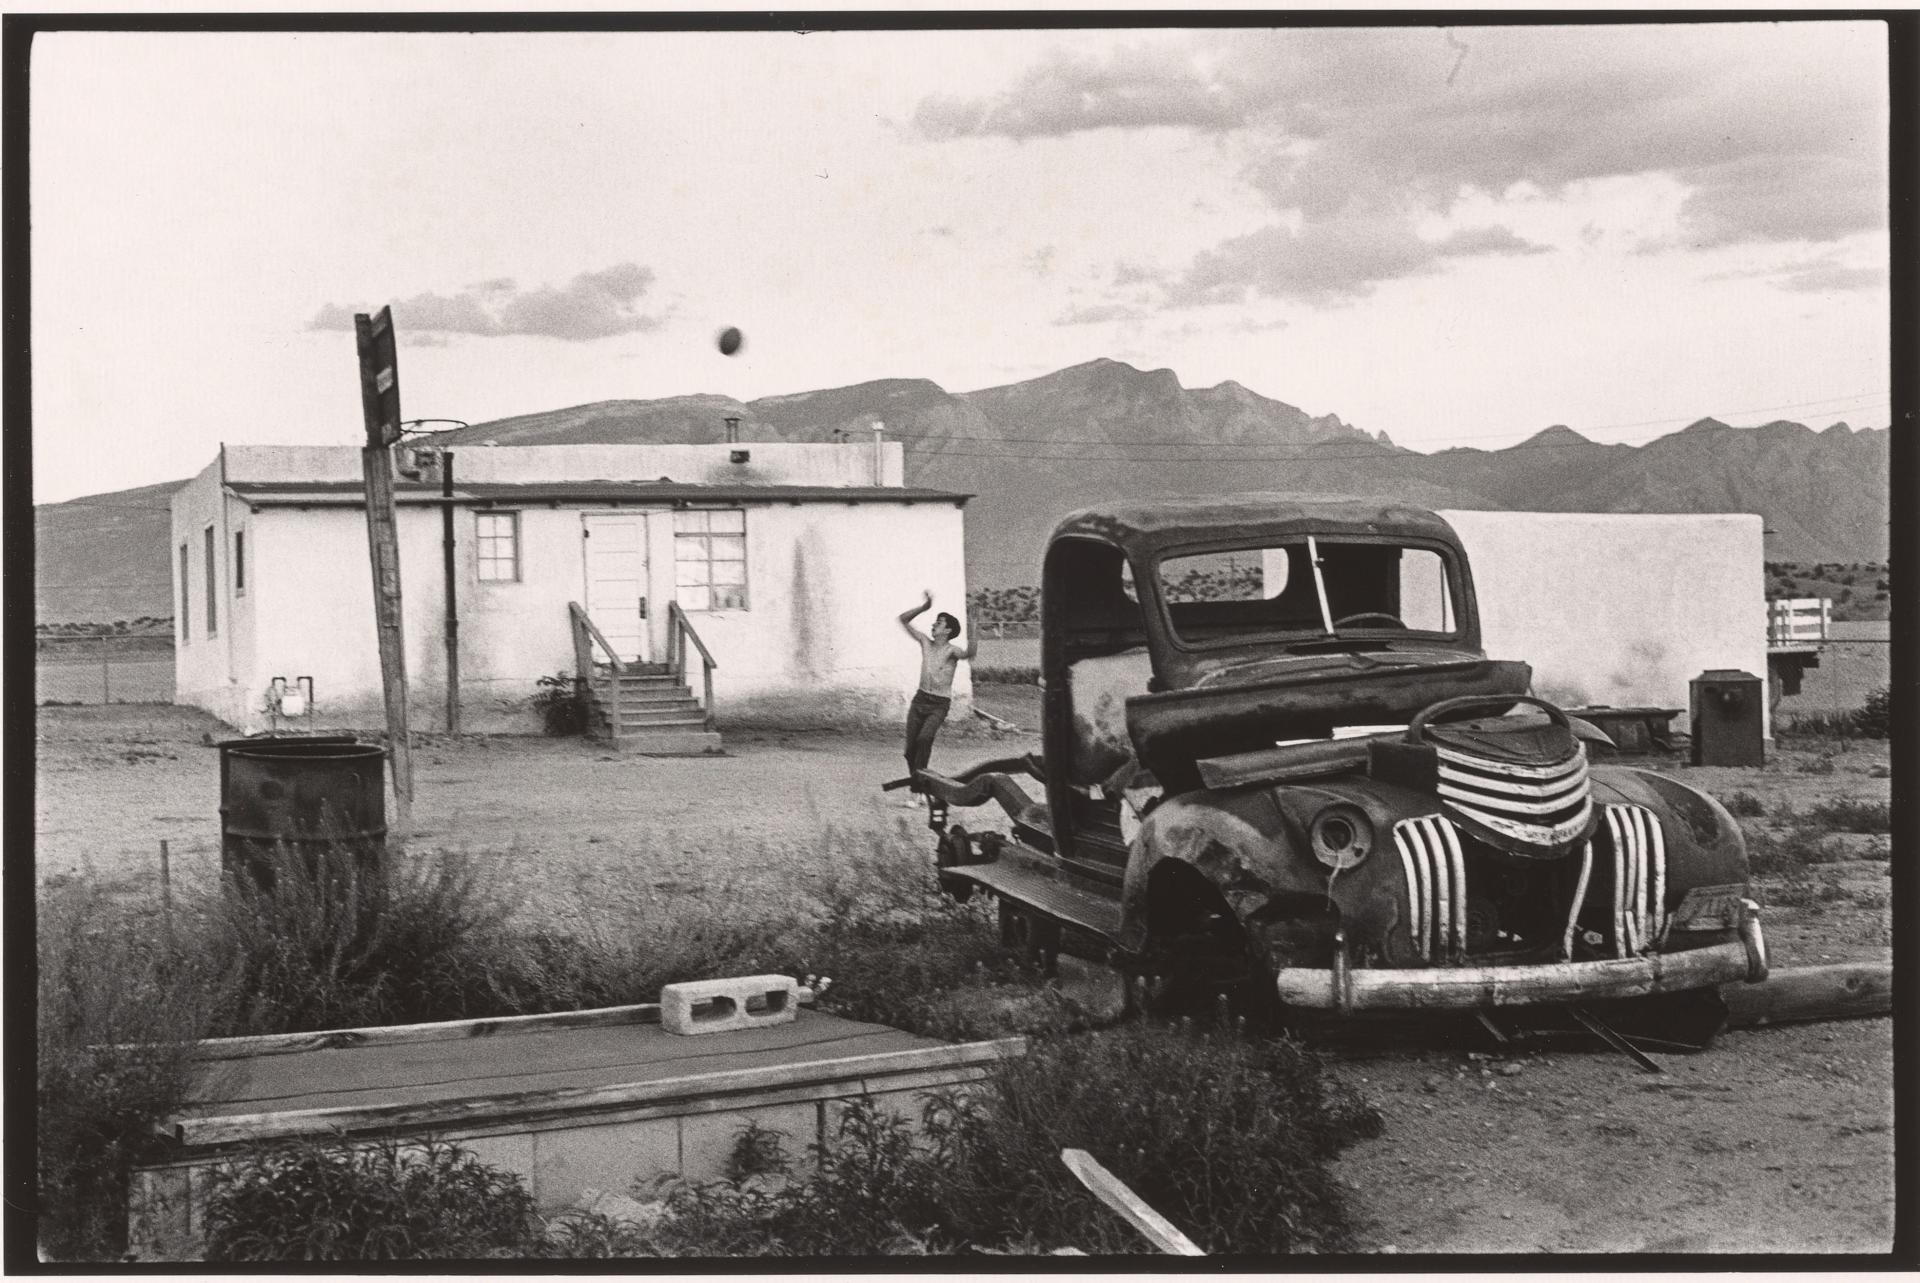 Danny Lyon image of New Mexico